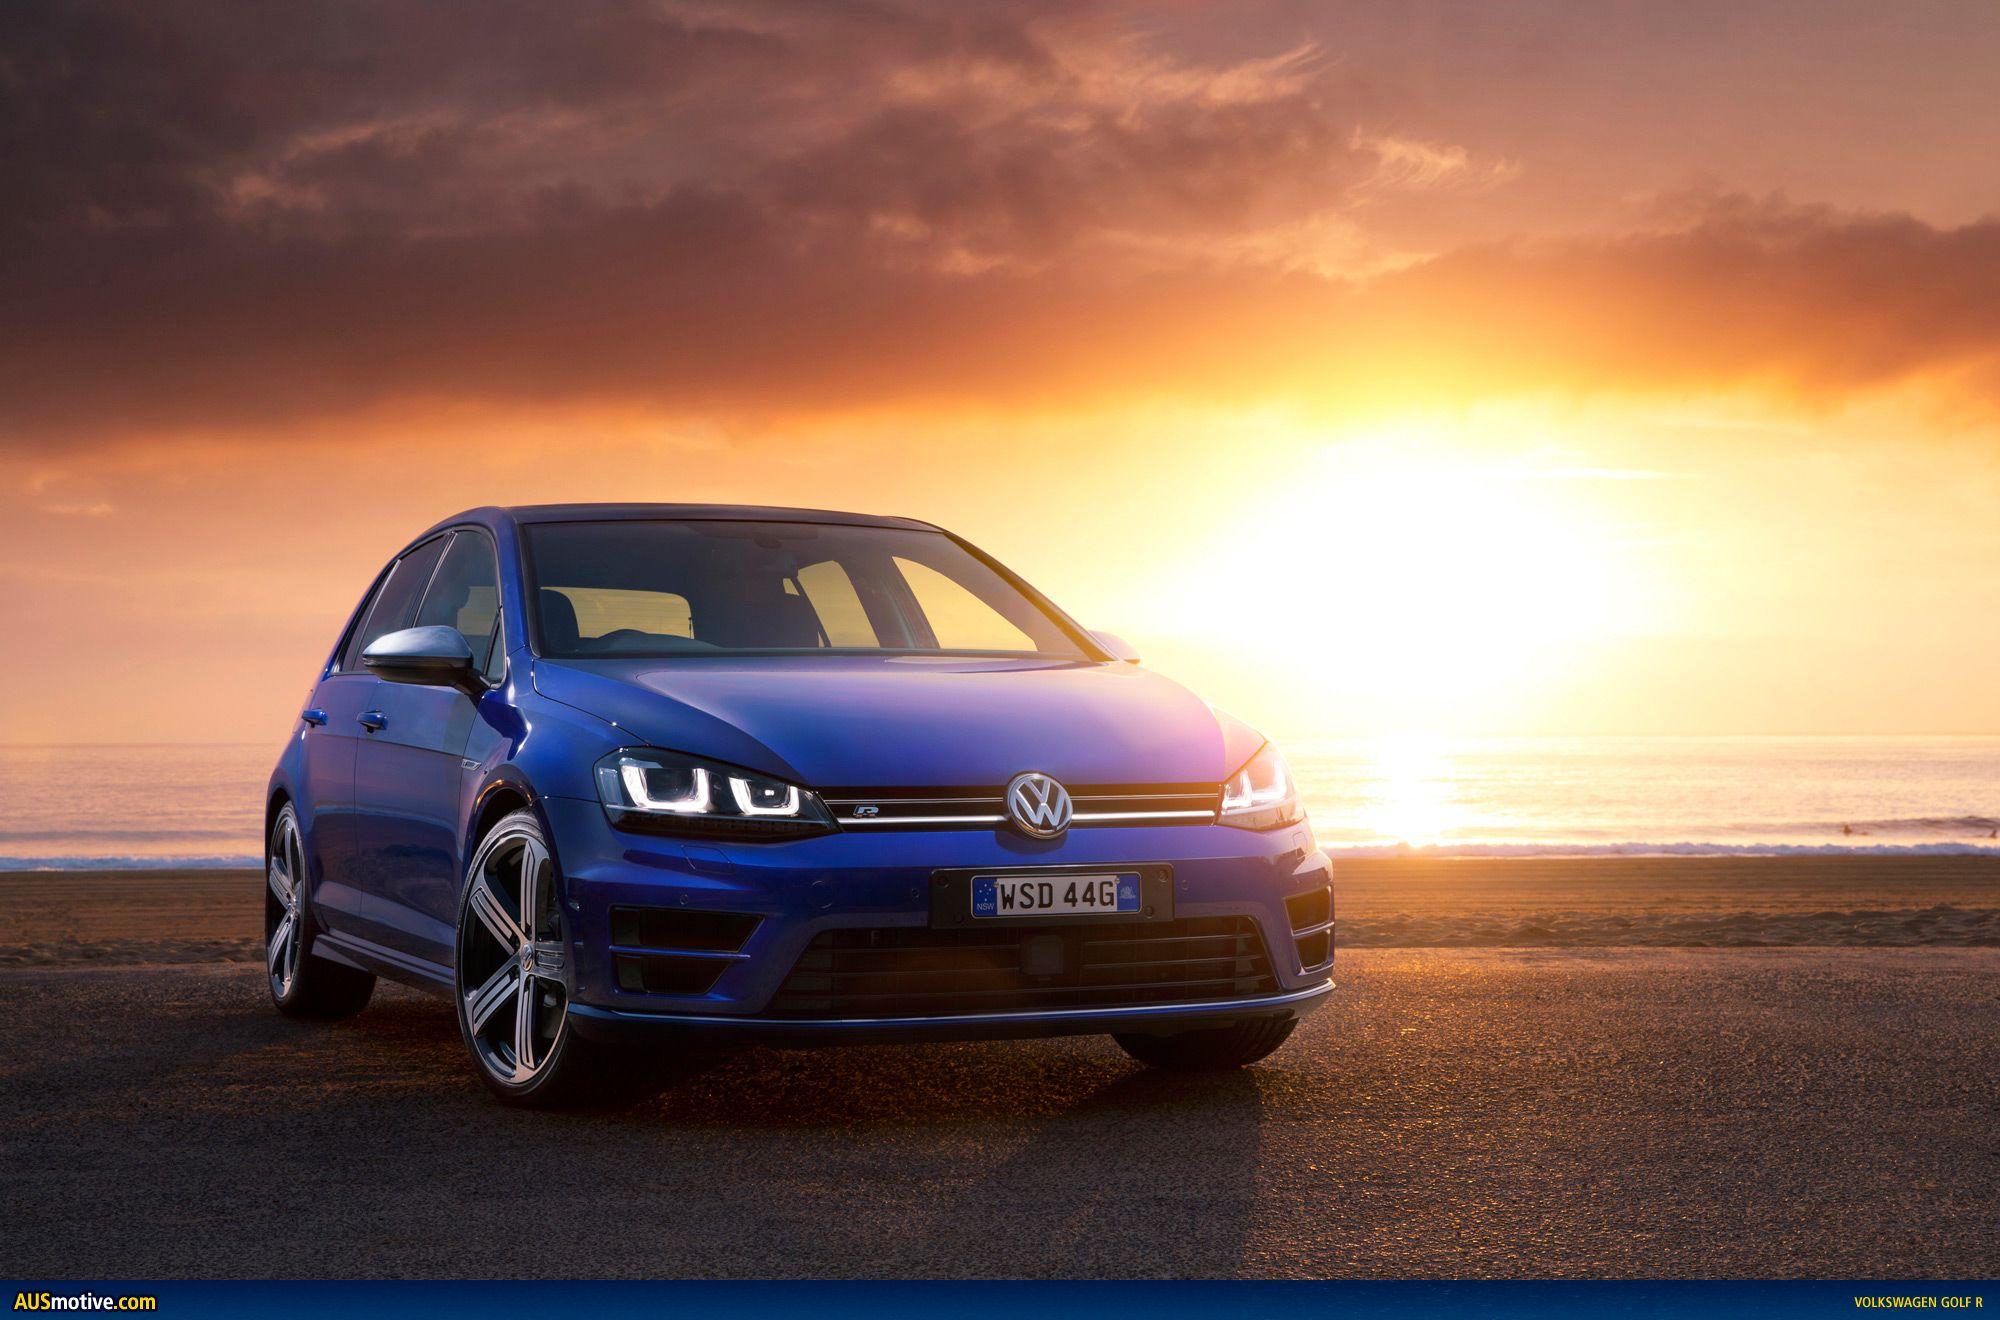 Volkswagen Golf R Wallpaper and Background Image